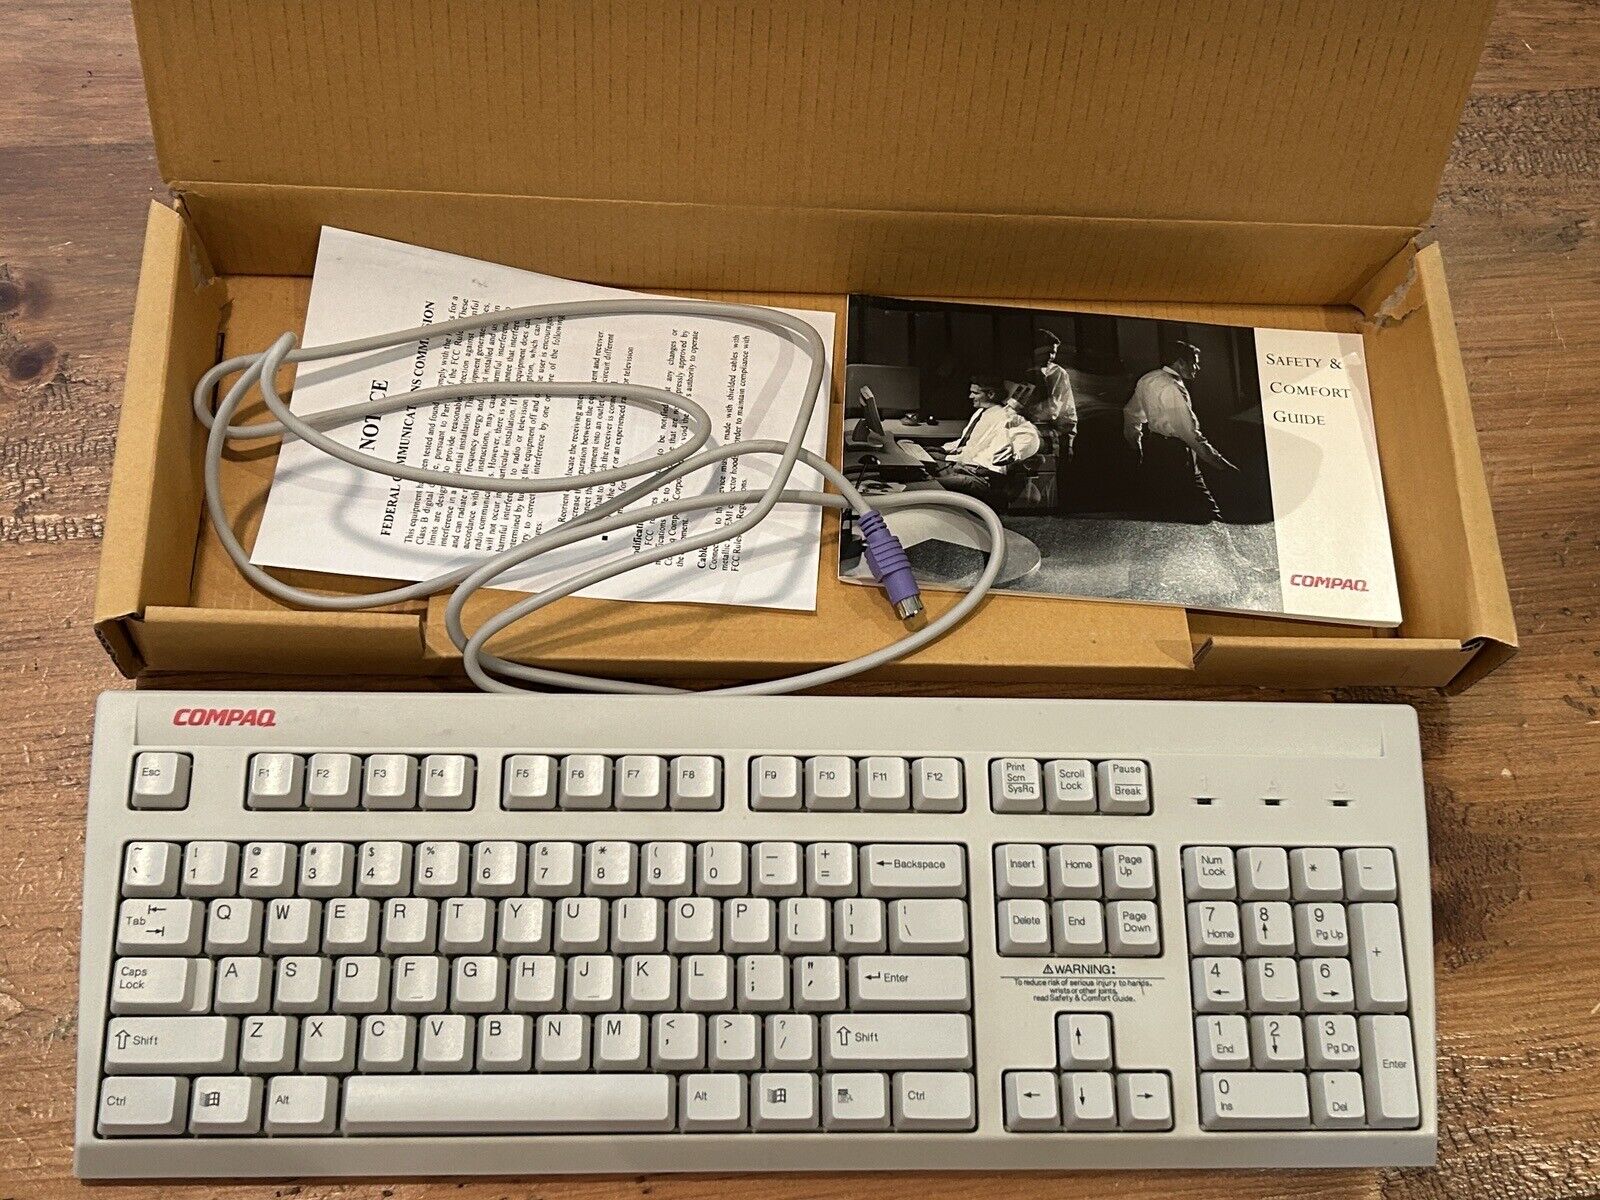 Compaq Ps/2 Keyboard - Vintage White Keyboard